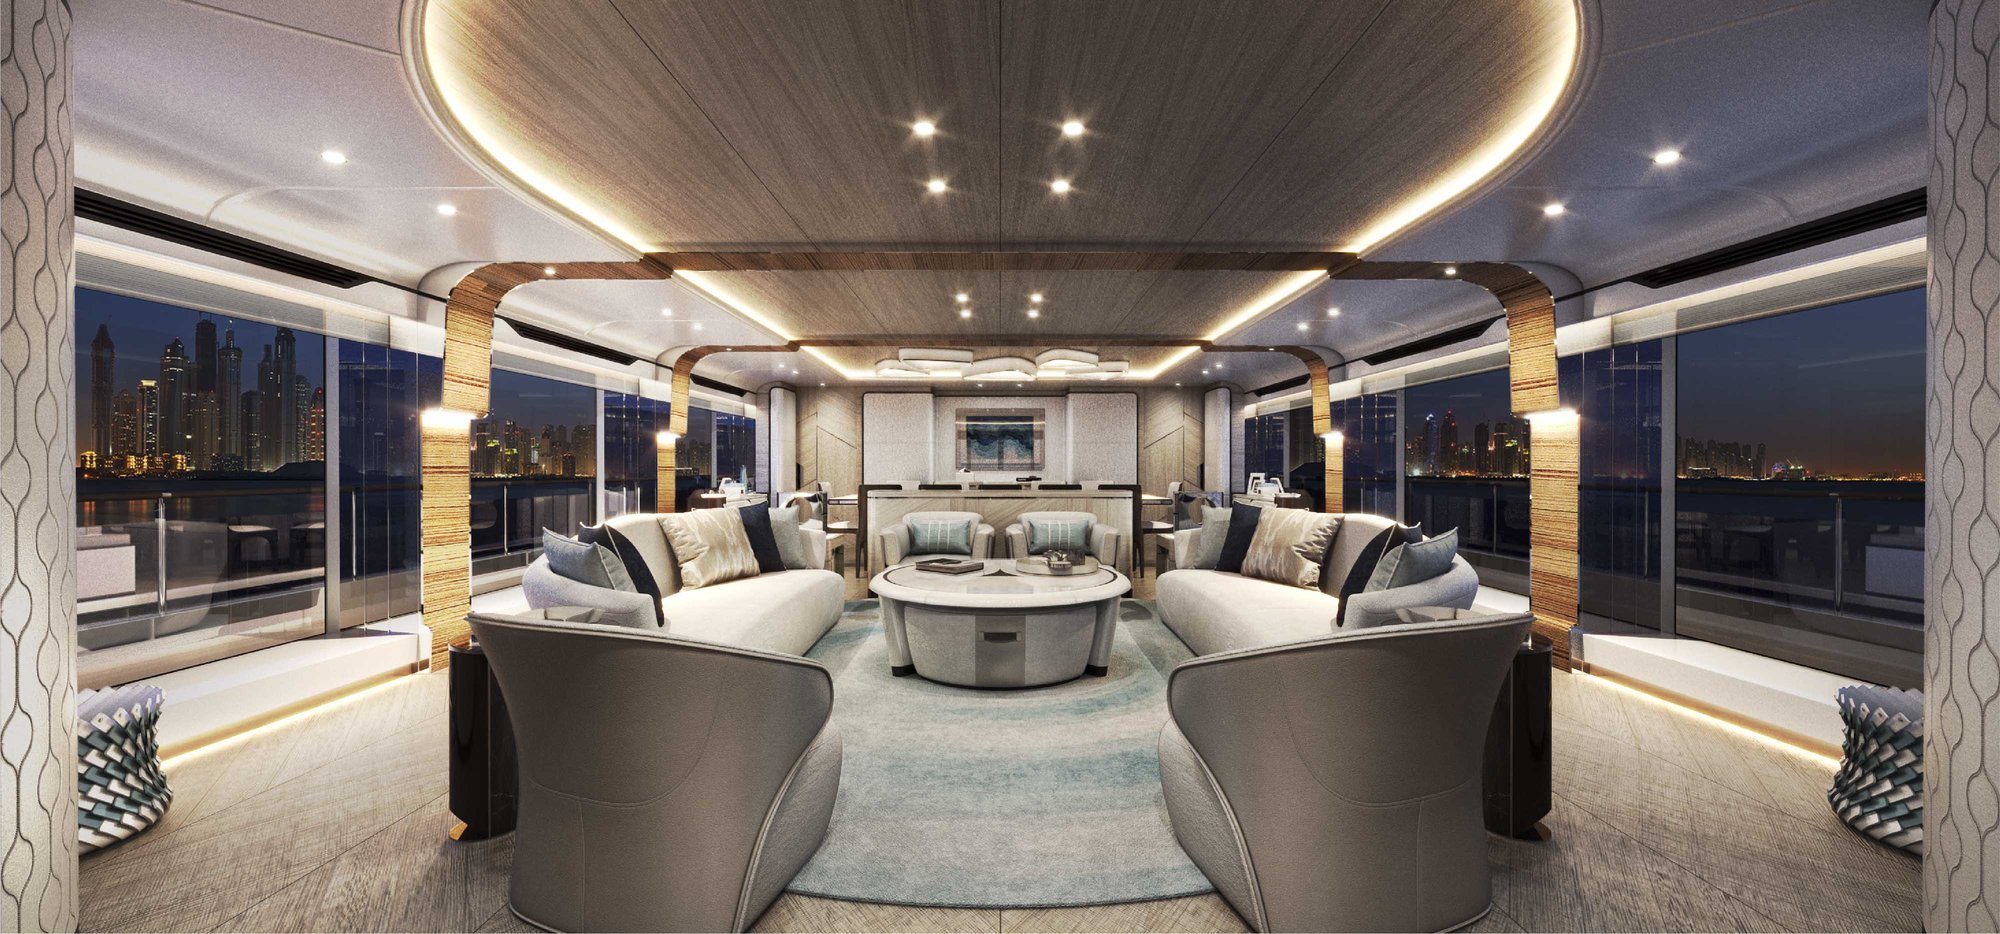 Gulf Craft, Majestic 160, yacht, articolo su Beyond the Magazine